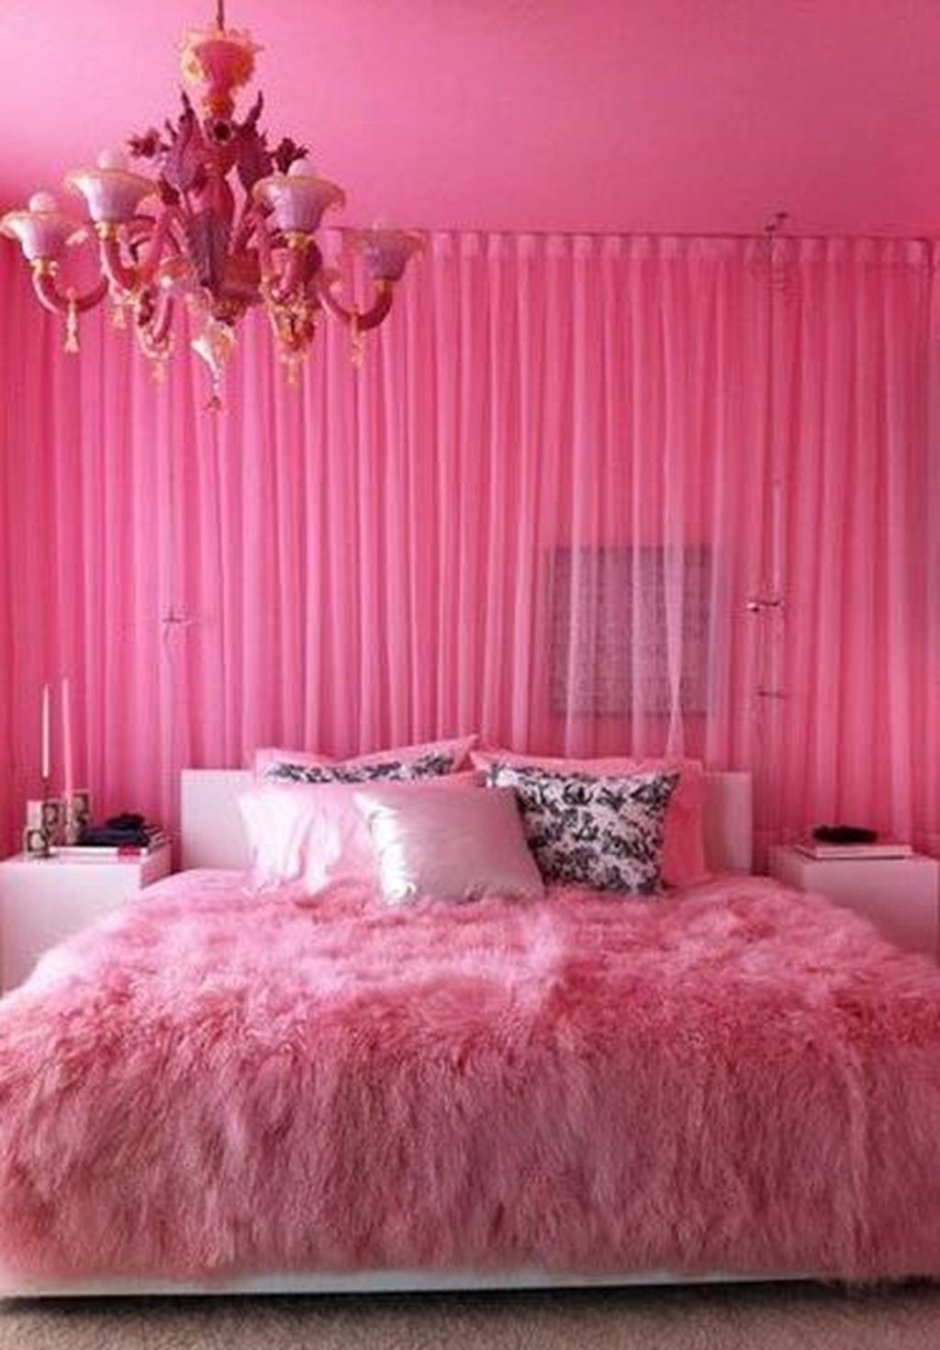 Light pink color in room